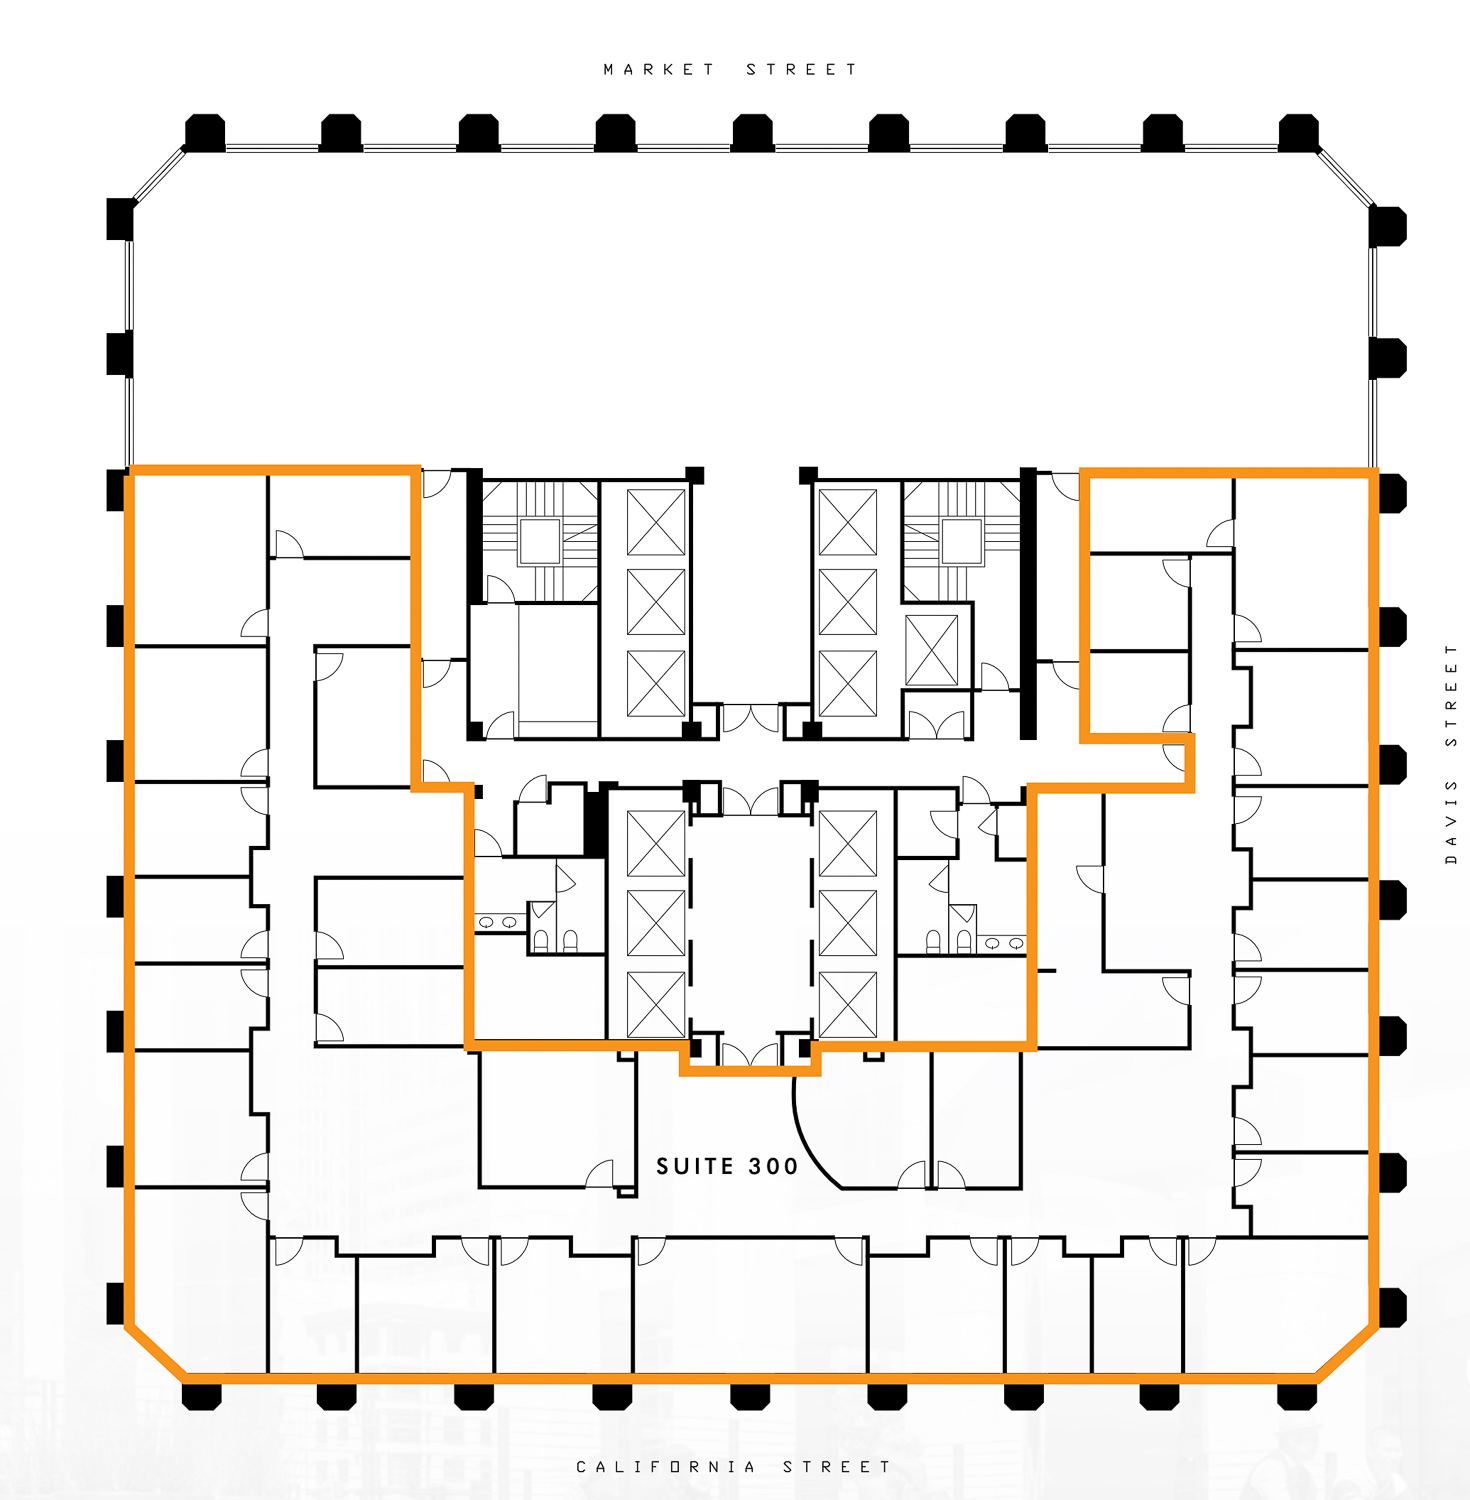 One California Street suite 300 floor plan spanning 10,370 square feet, image via CBRE